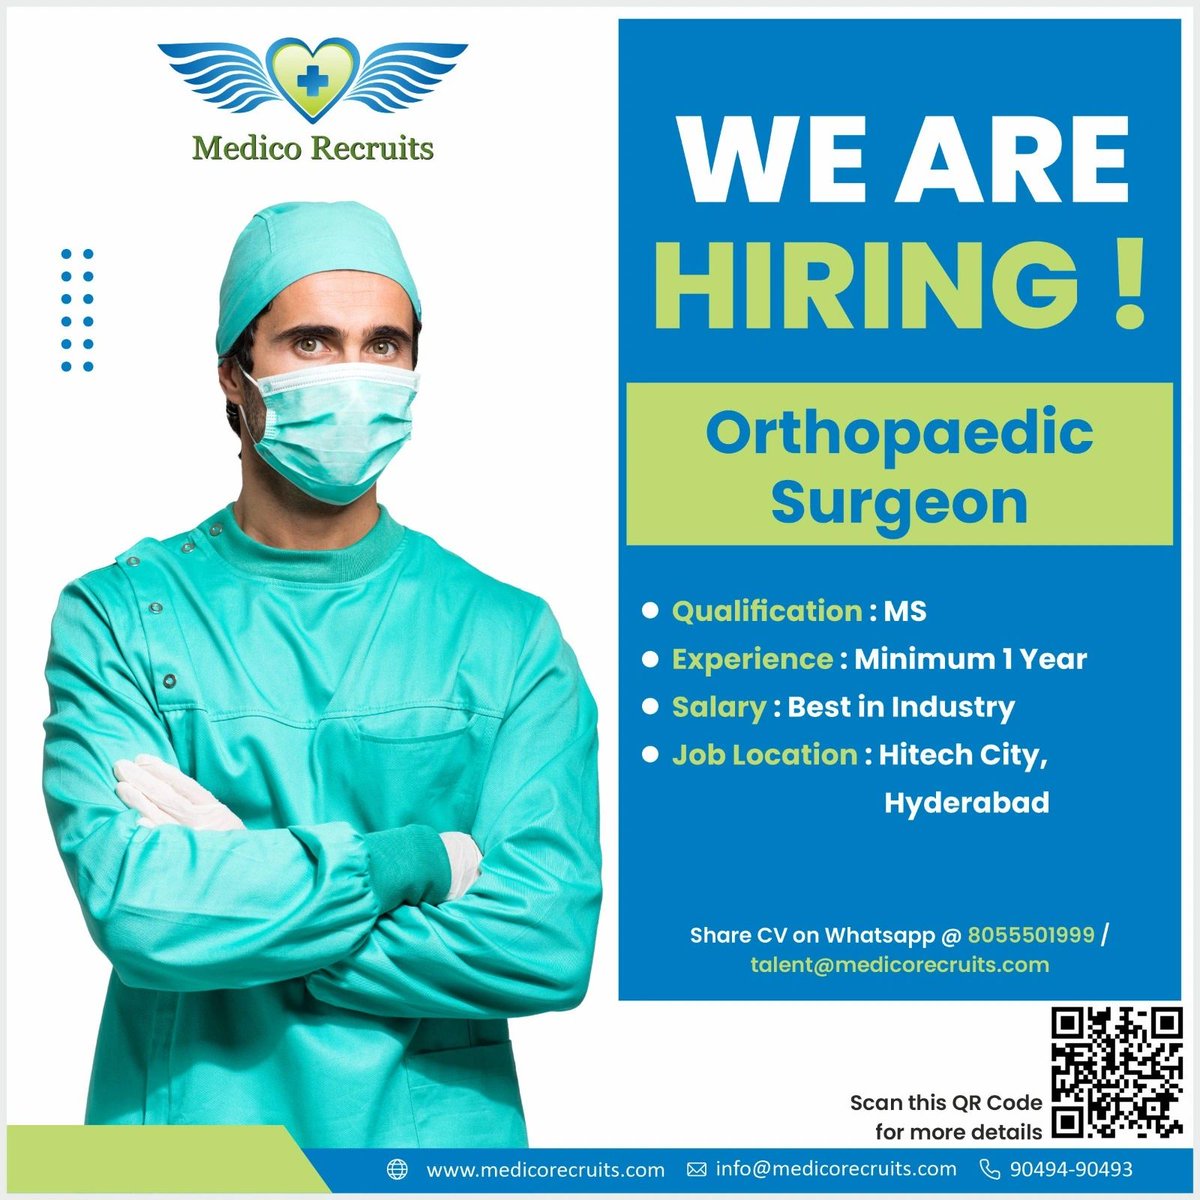 #orthopedicsurgery #orthopedics #orthodontics #orthopaedics #orthopedic #orthopedicsurgeon #orthopaedicsurgeon #orthopaedicsurgery